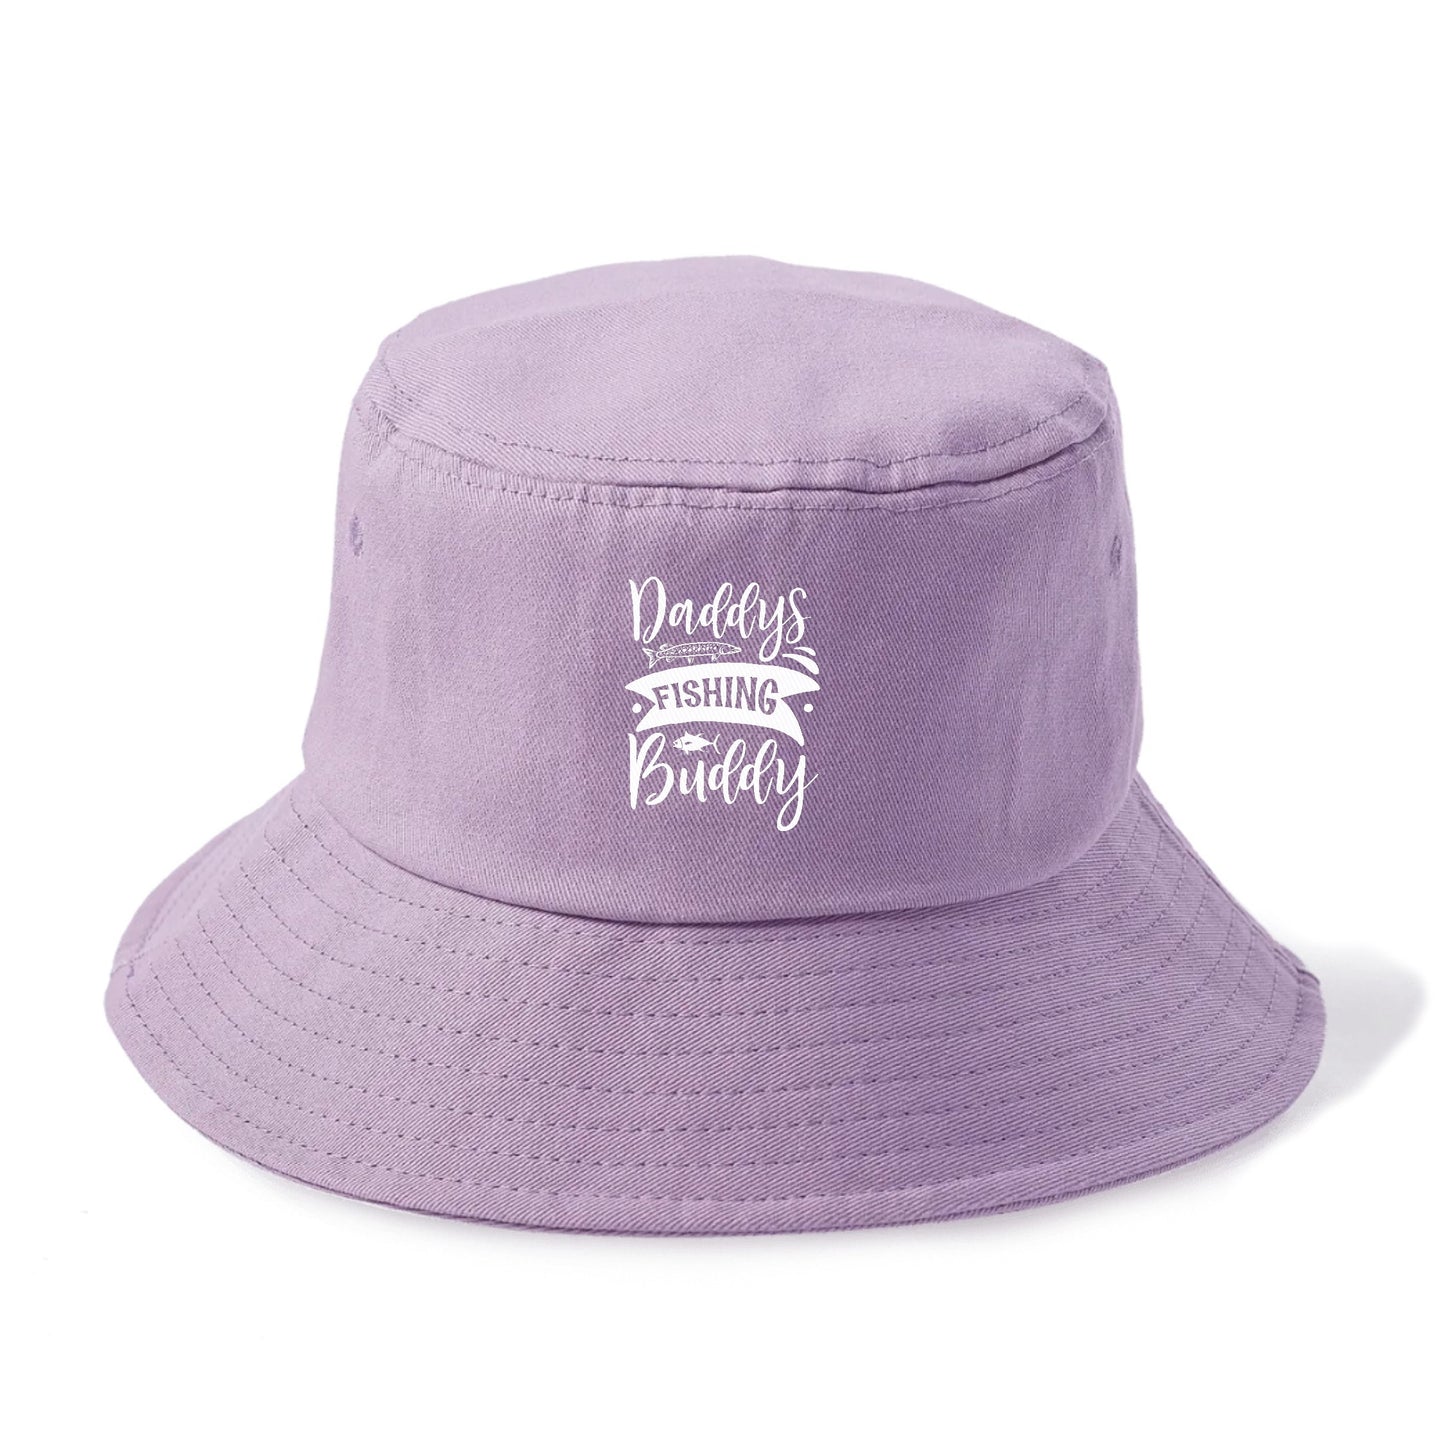 daddy's fishing buddy Hat